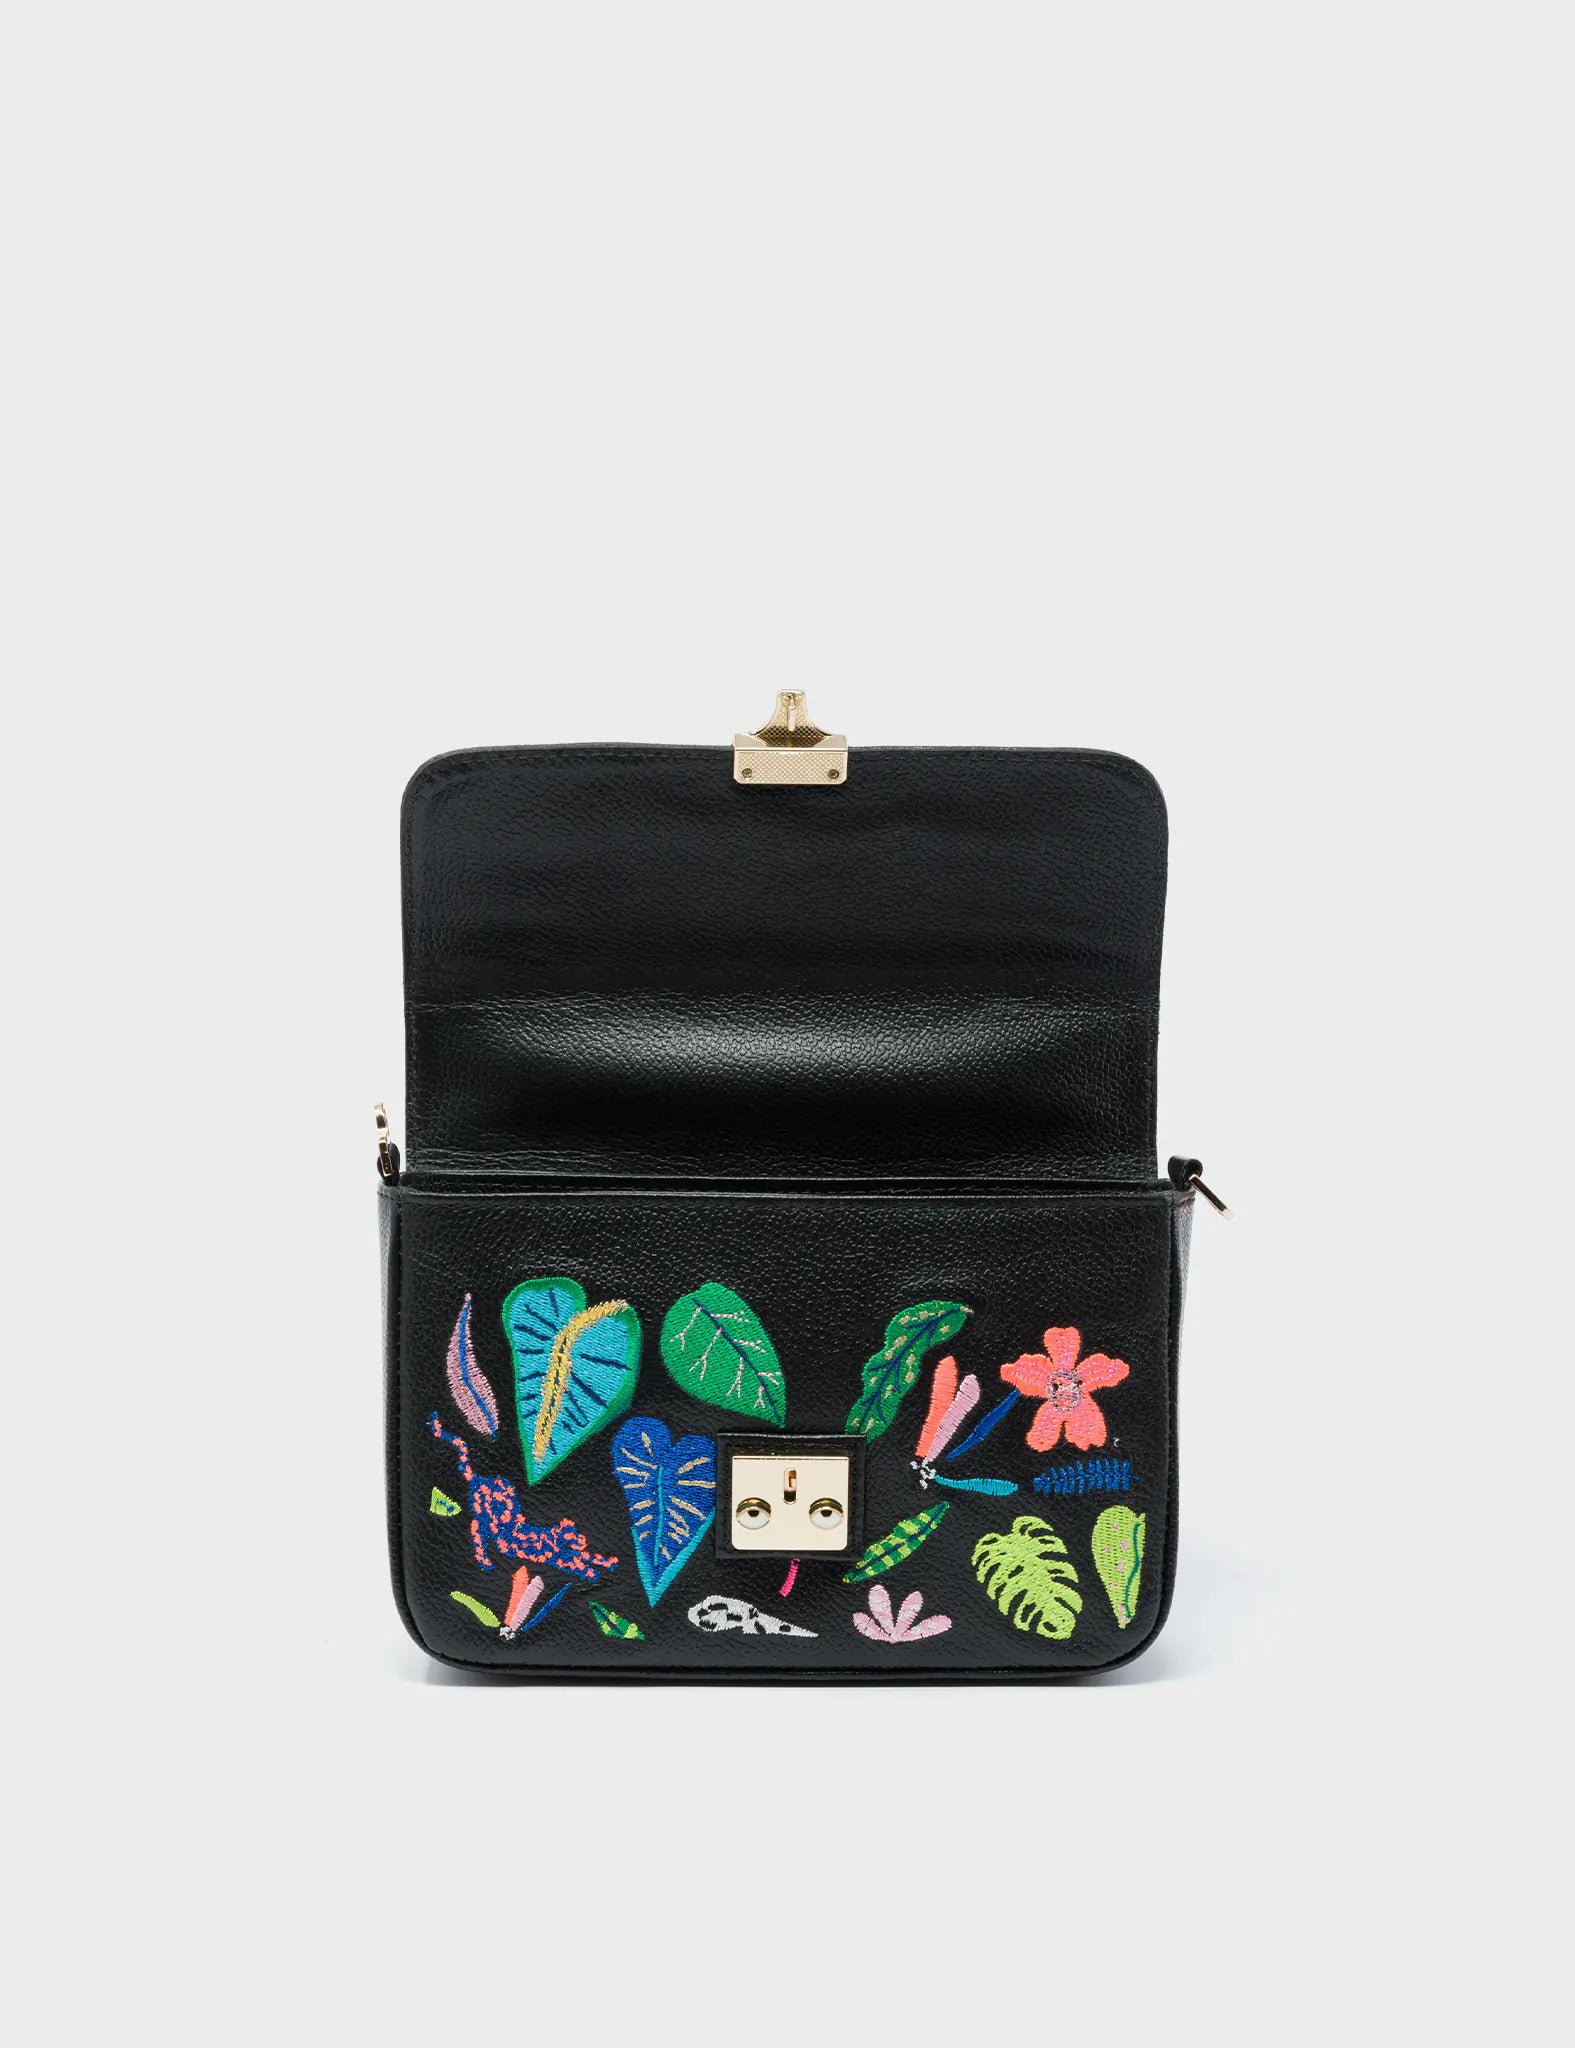 Amantis Cameo Black Leather Crossbody Mini Handbag - El Trópico Embroidery Design - Open Flap